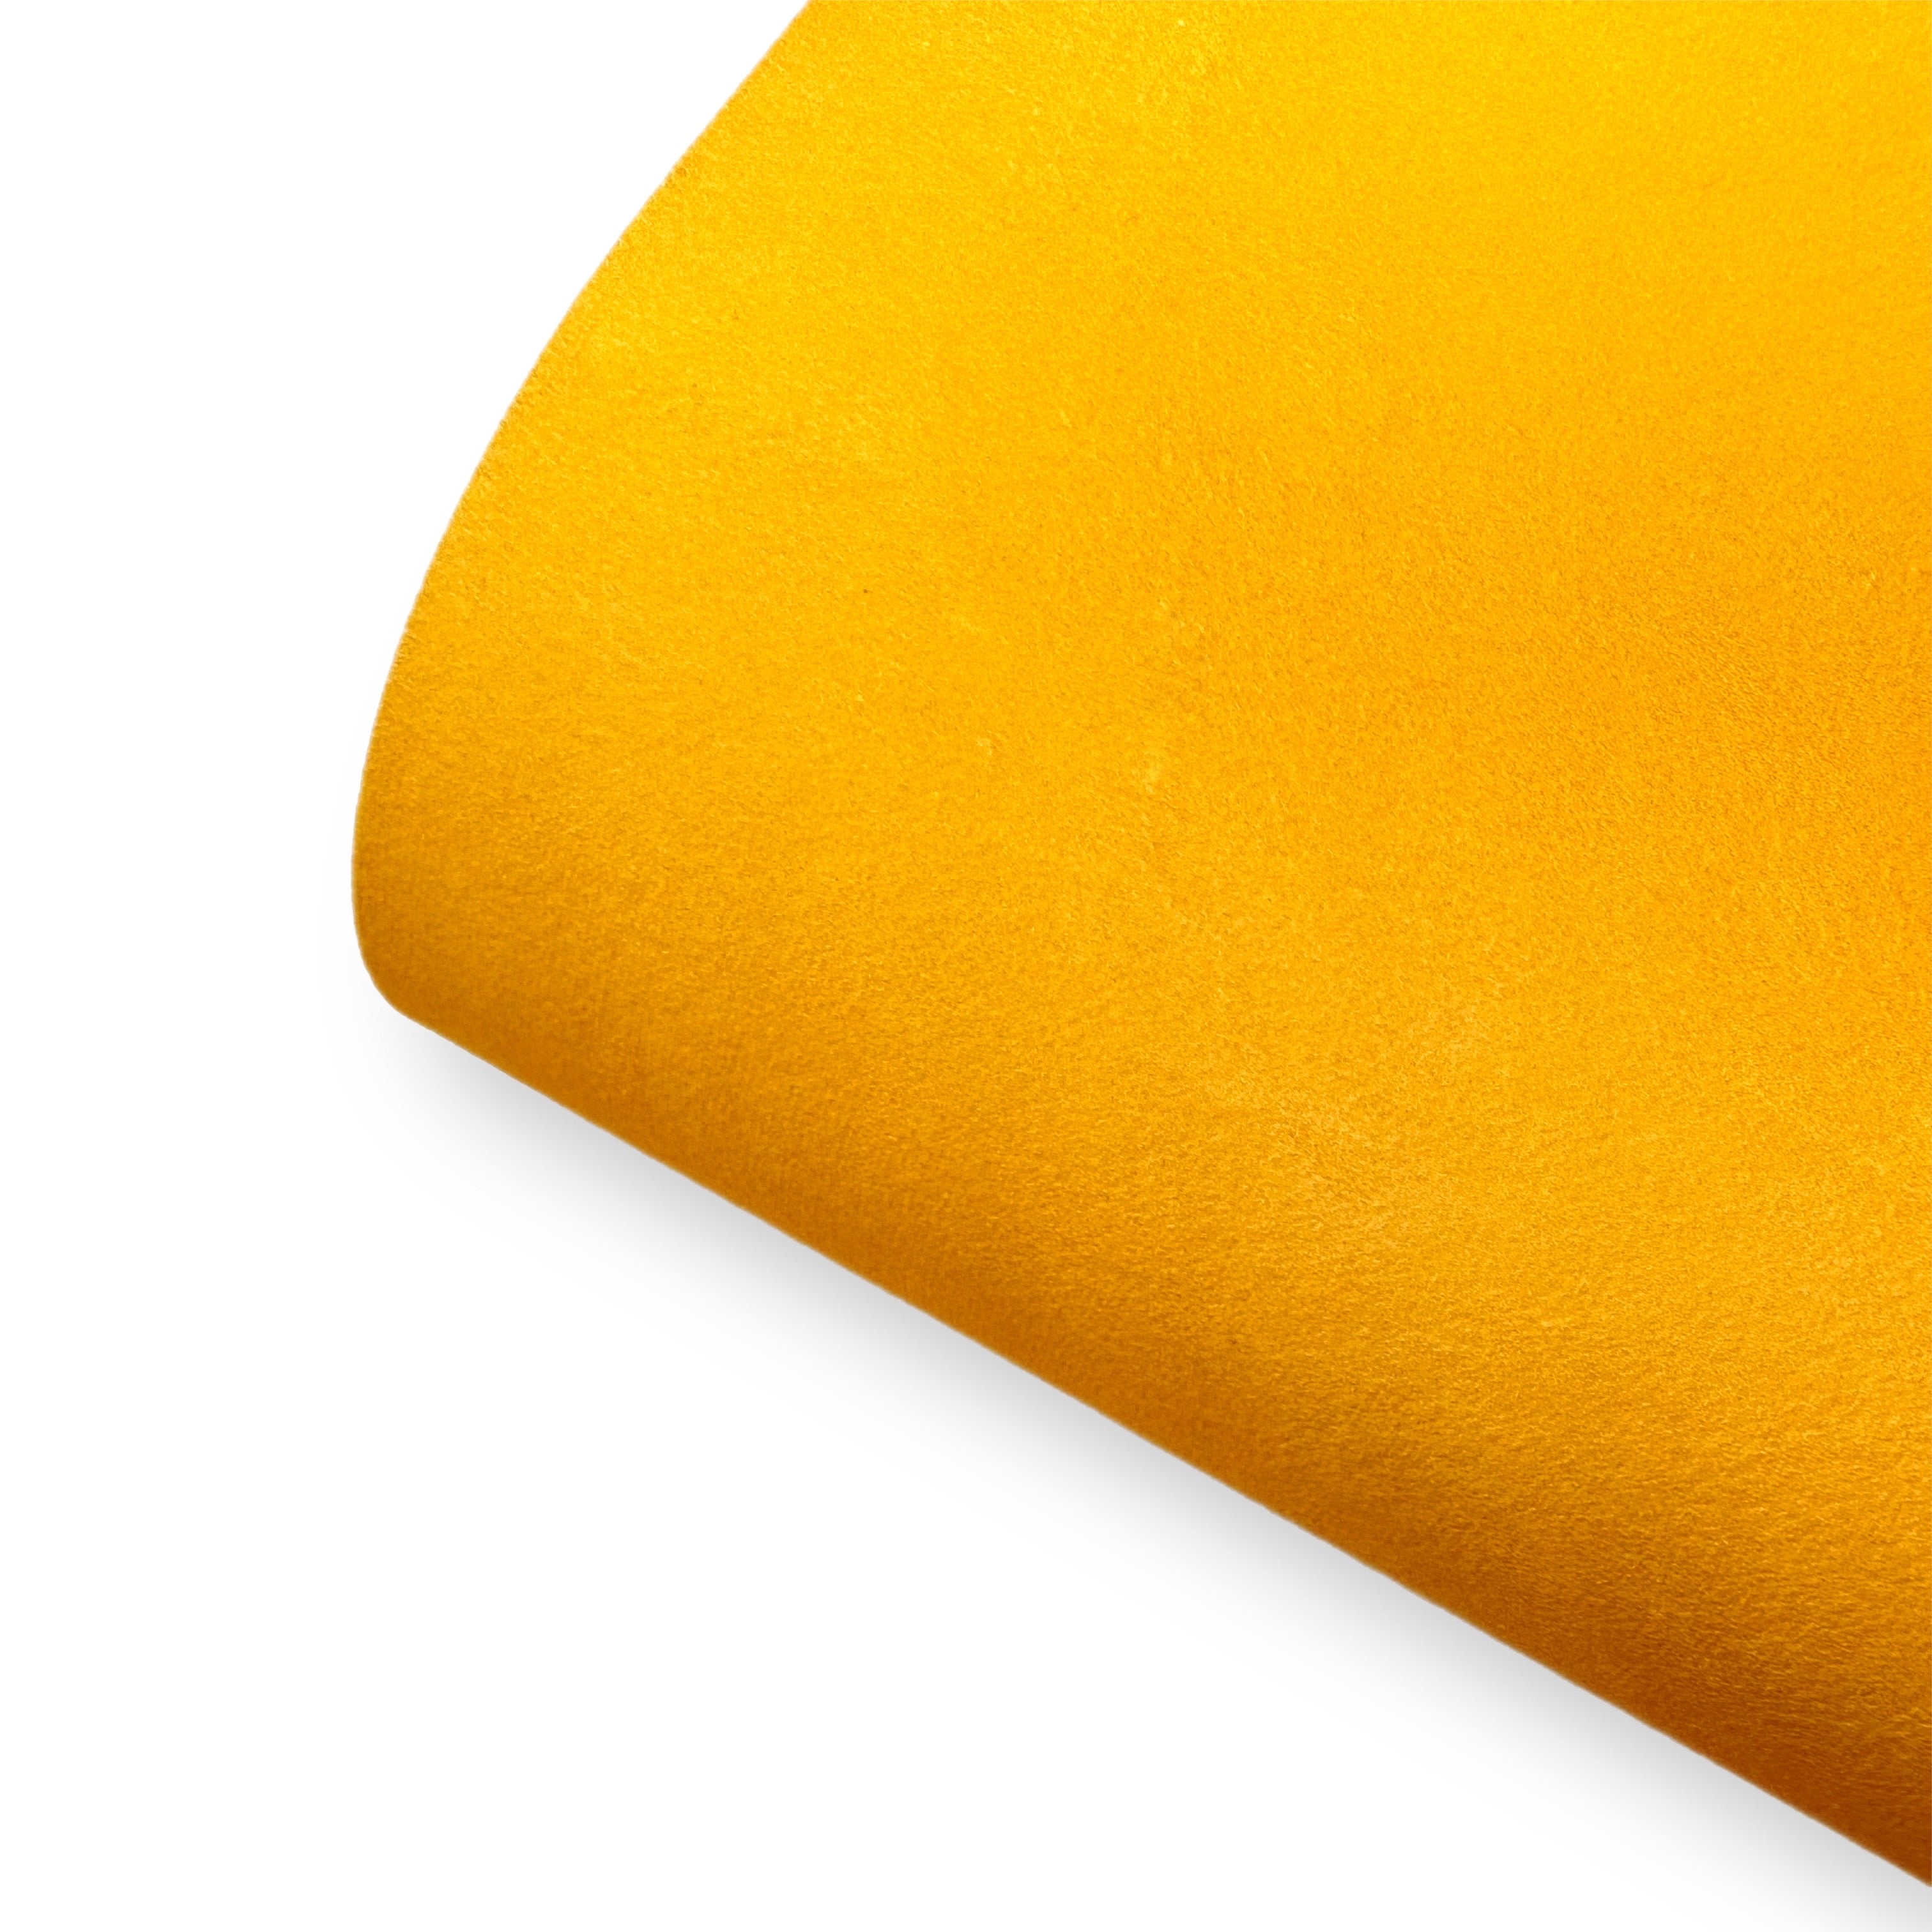 Teddy Deep Yellow- Felt, Suede, Velvet or Satin Premium Fabric Sheets